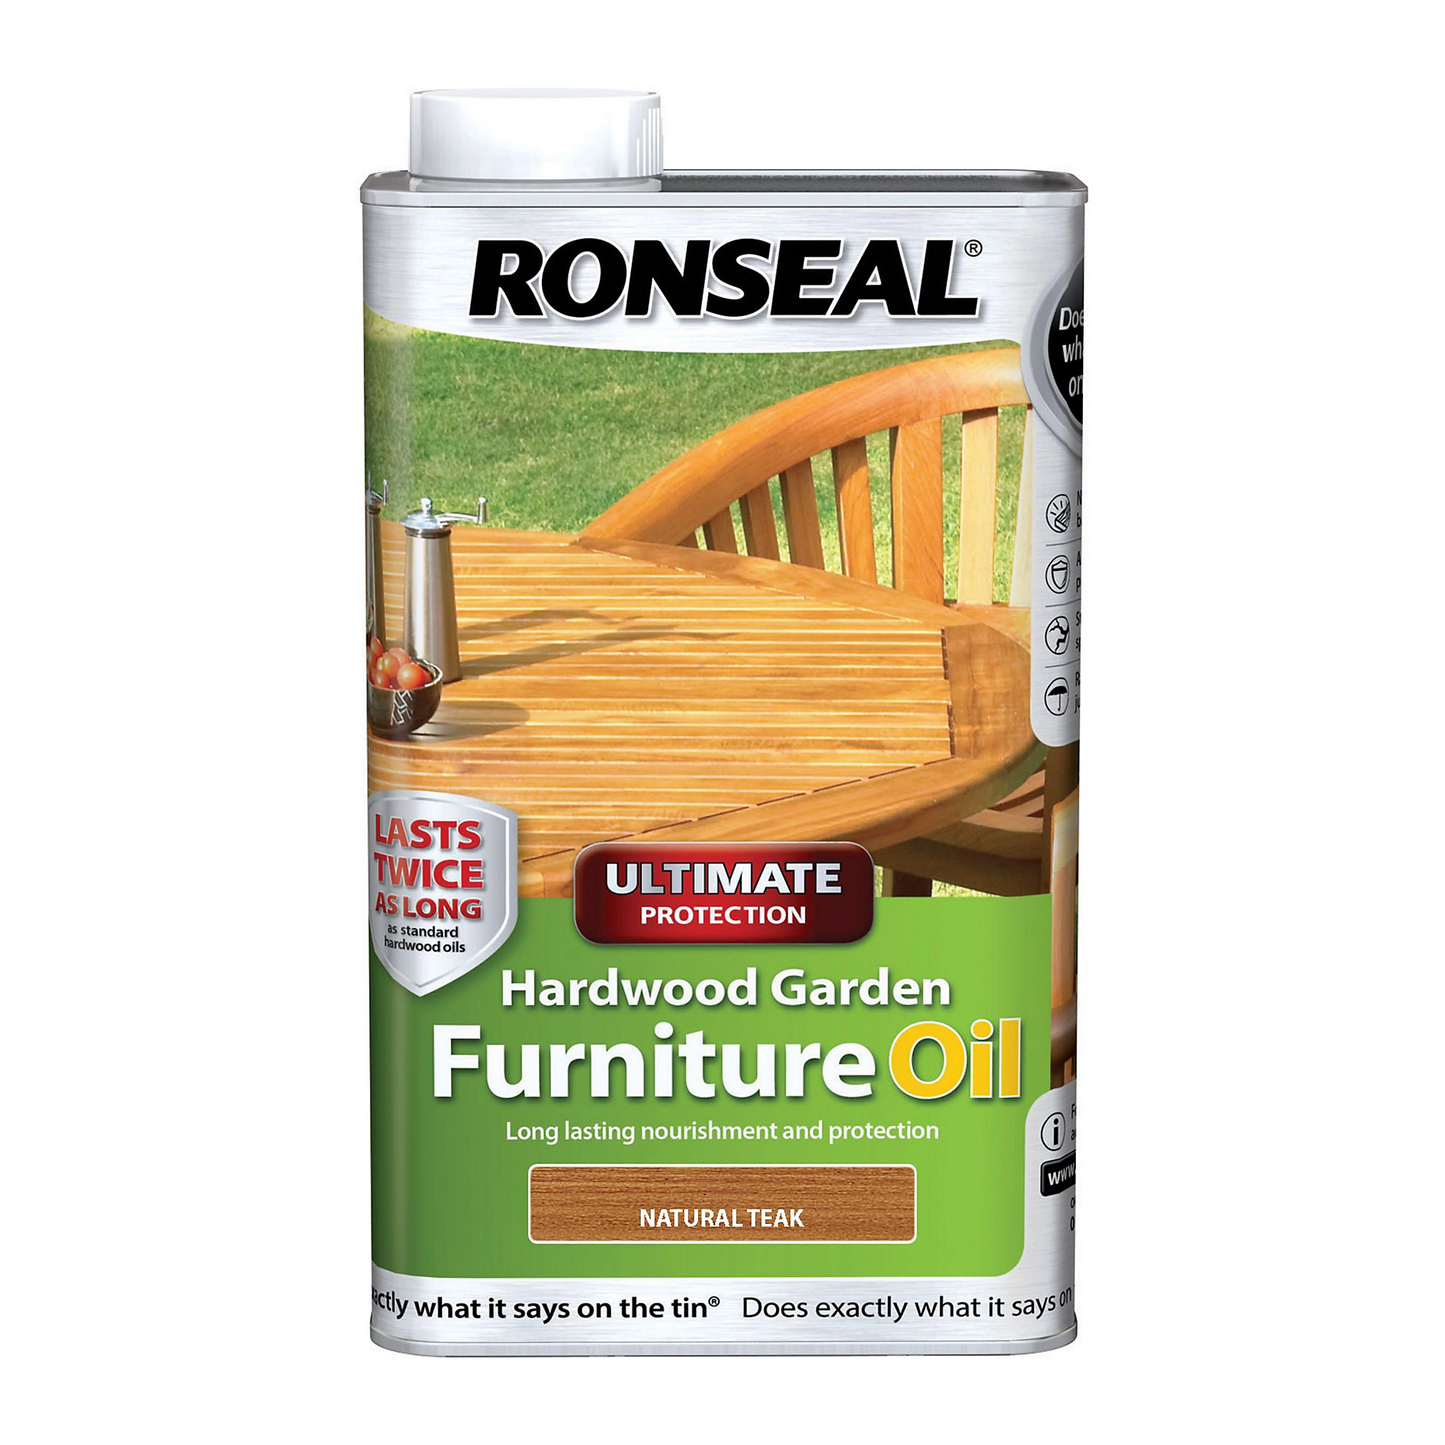 Ronseal Hardwood Garden Furniture Oil Natural Teak 1L